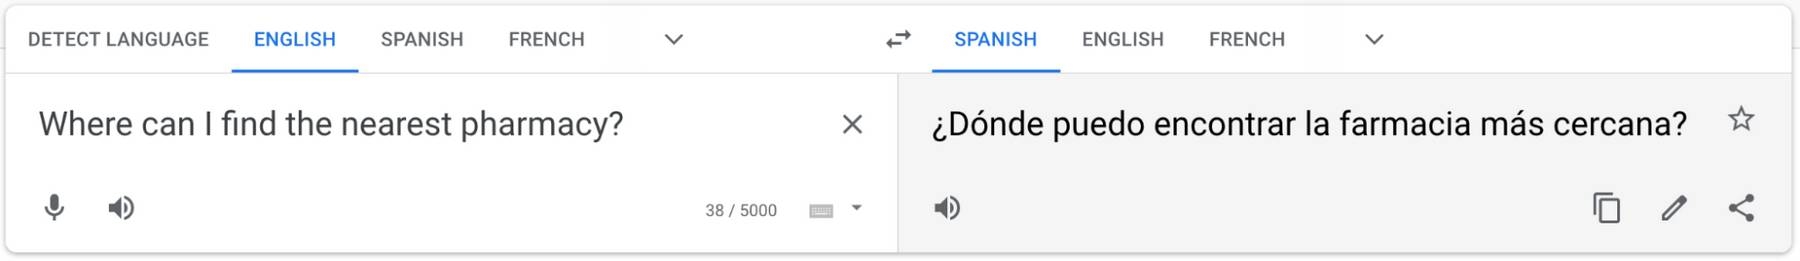 A English to Spanish Google translation of 'Where can I find the nearest pharmacy?' to '¿Dónde puedo encontrar la farmacia más cercana?'